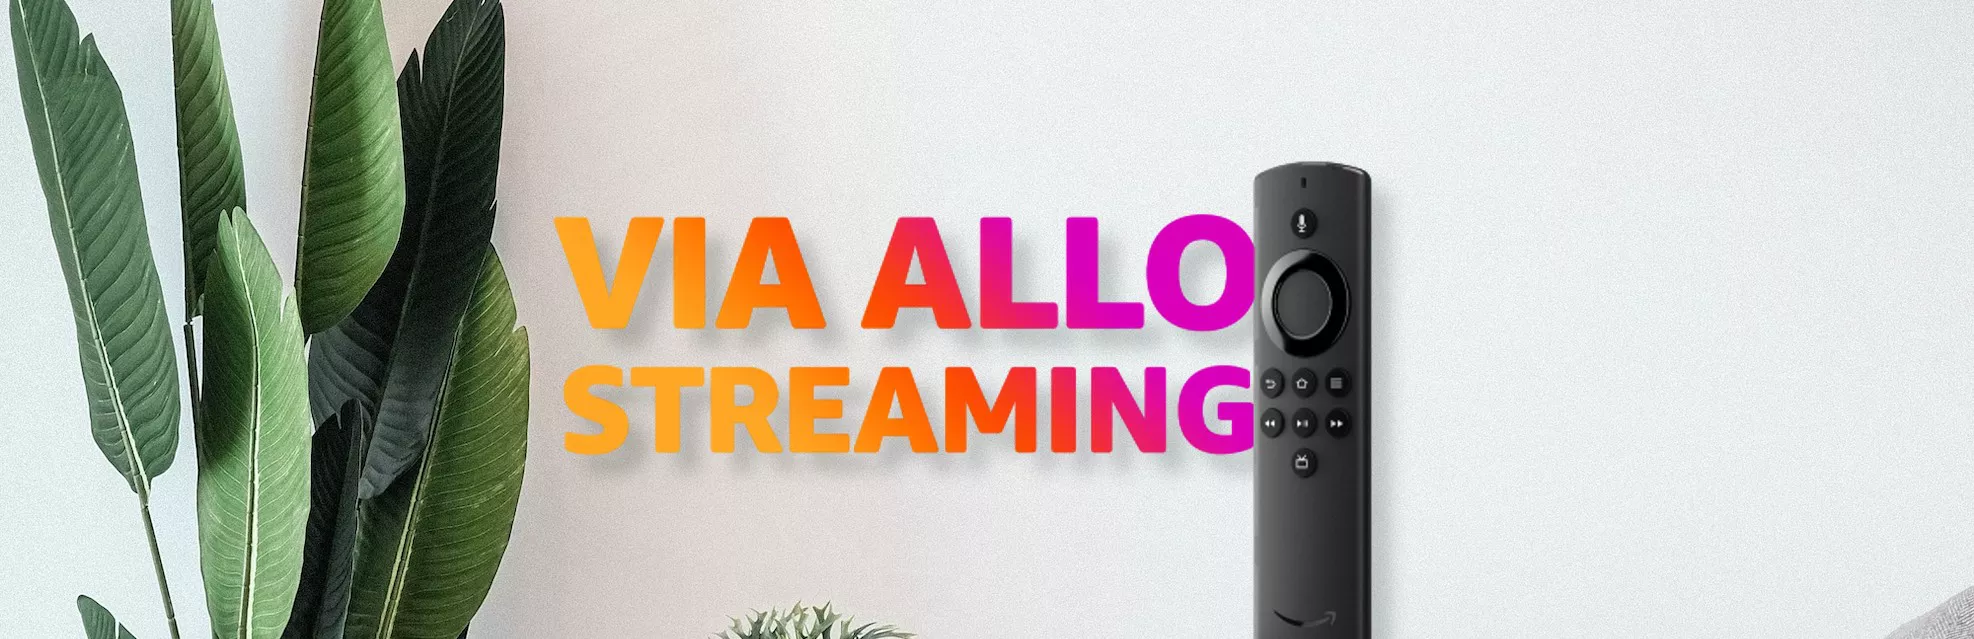 Fire TV Stick Lite in OFFERTA: streaming e Alexa a meno di 20€